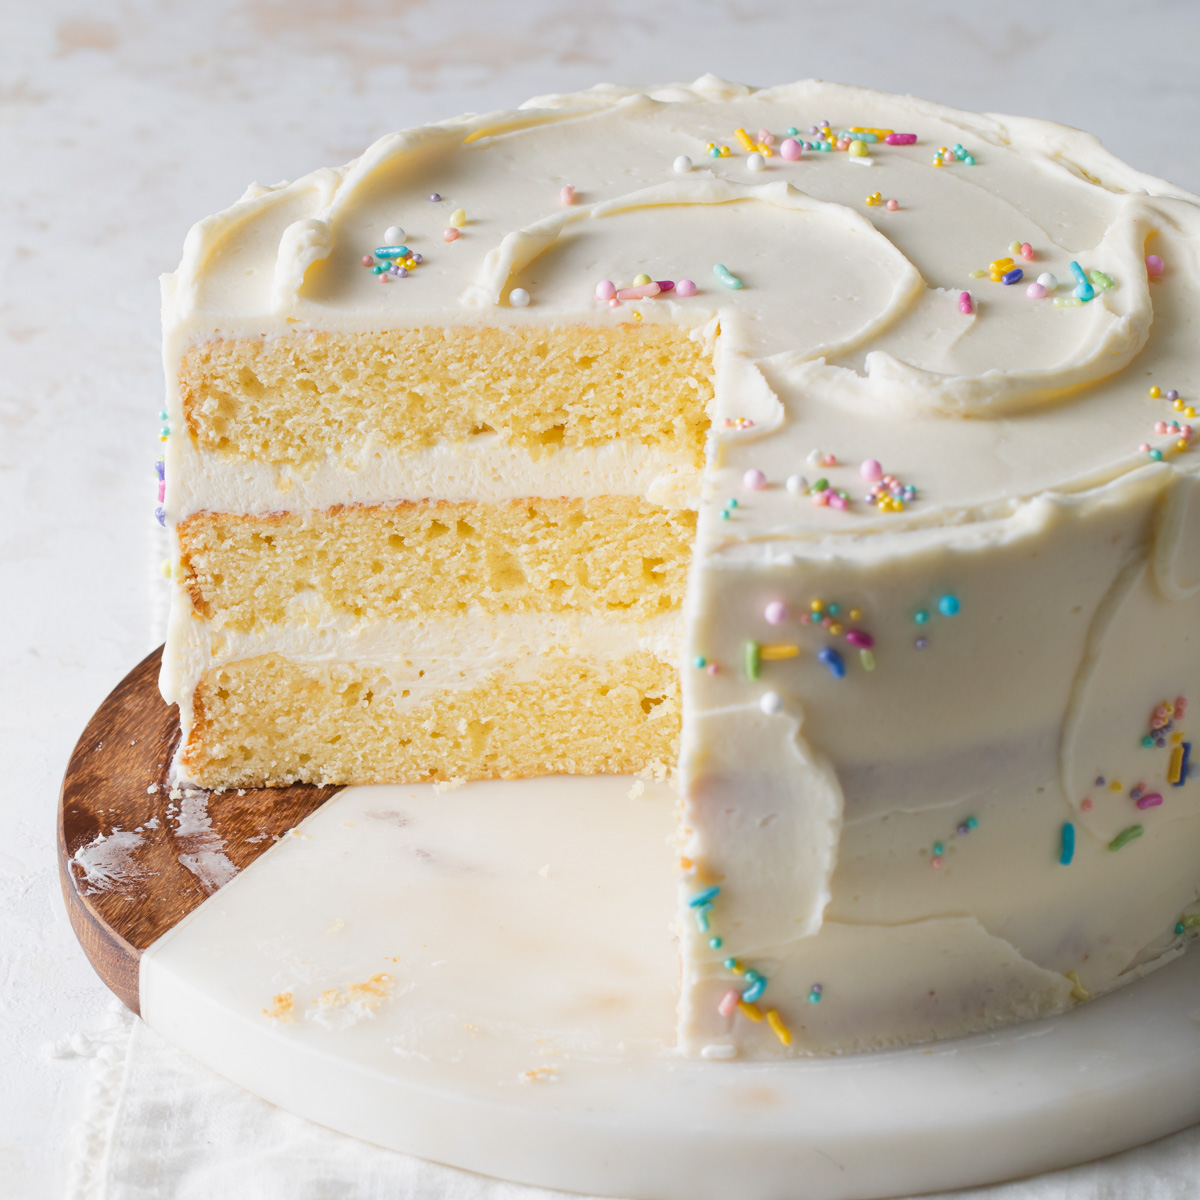 6-Inch Vanilla Cake Recipe - Live Well Bake Often